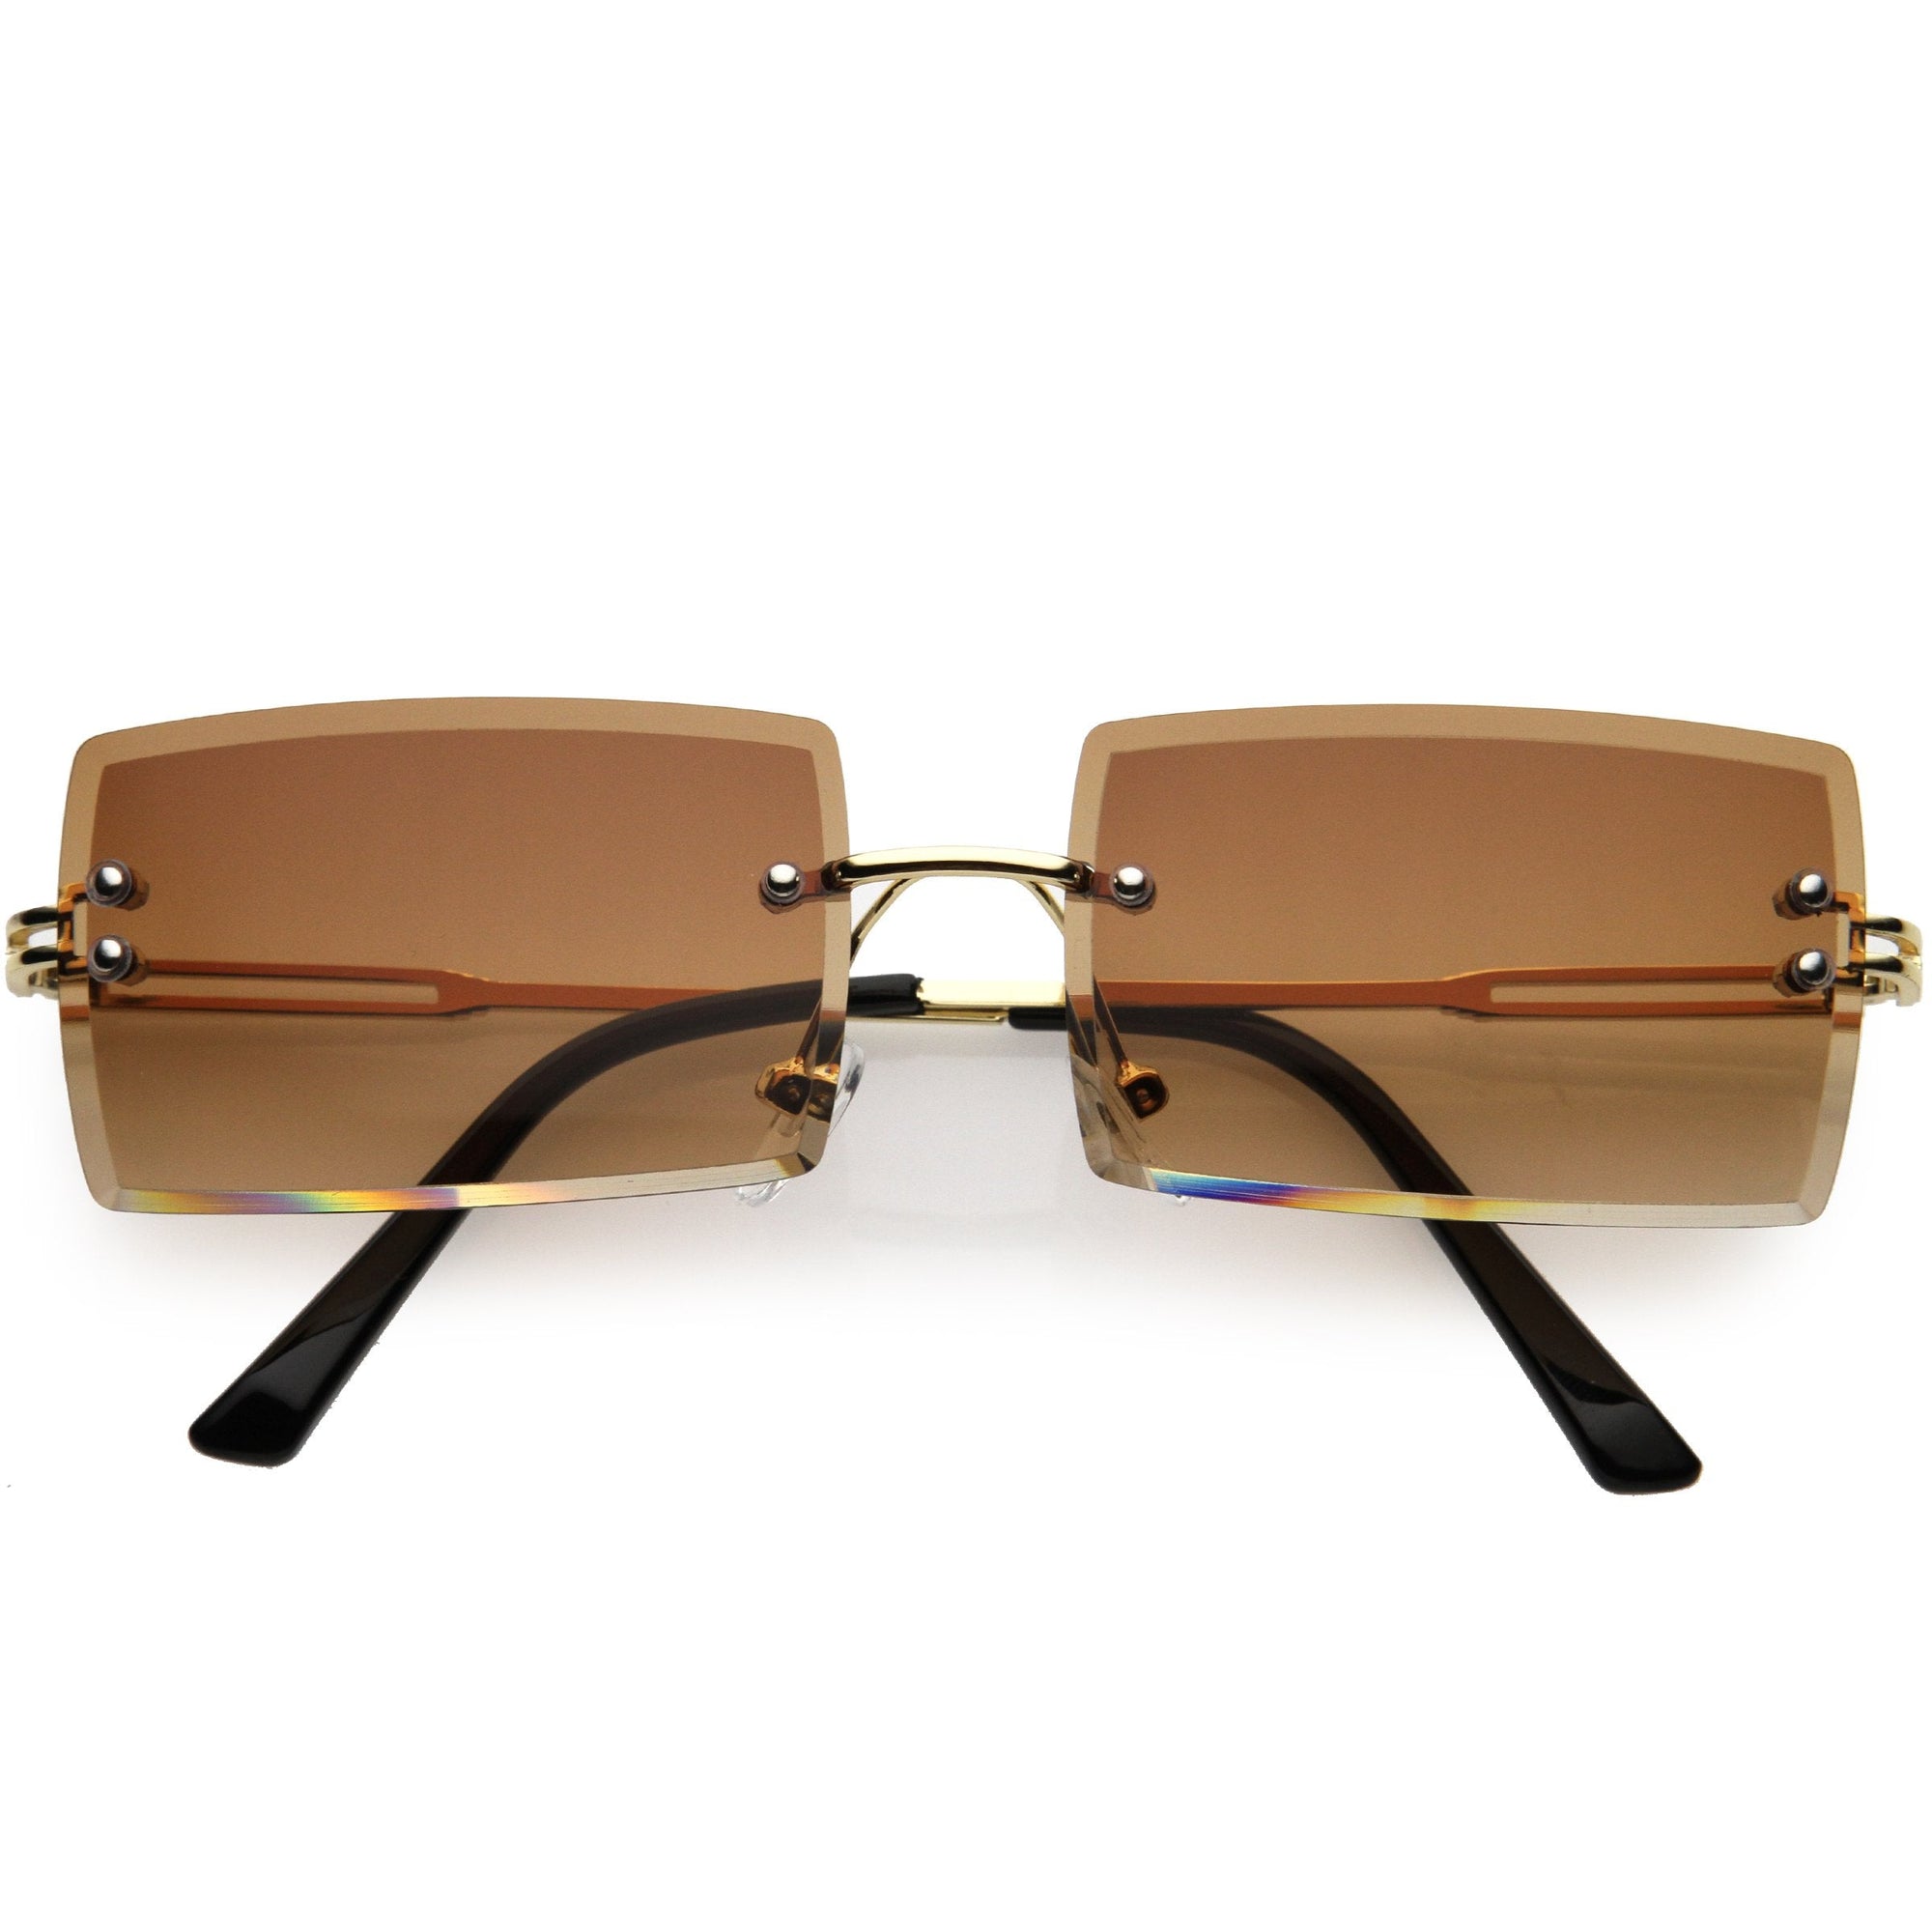 zeroUV Luxe 90s Inspired Full Rimless Sunglasses